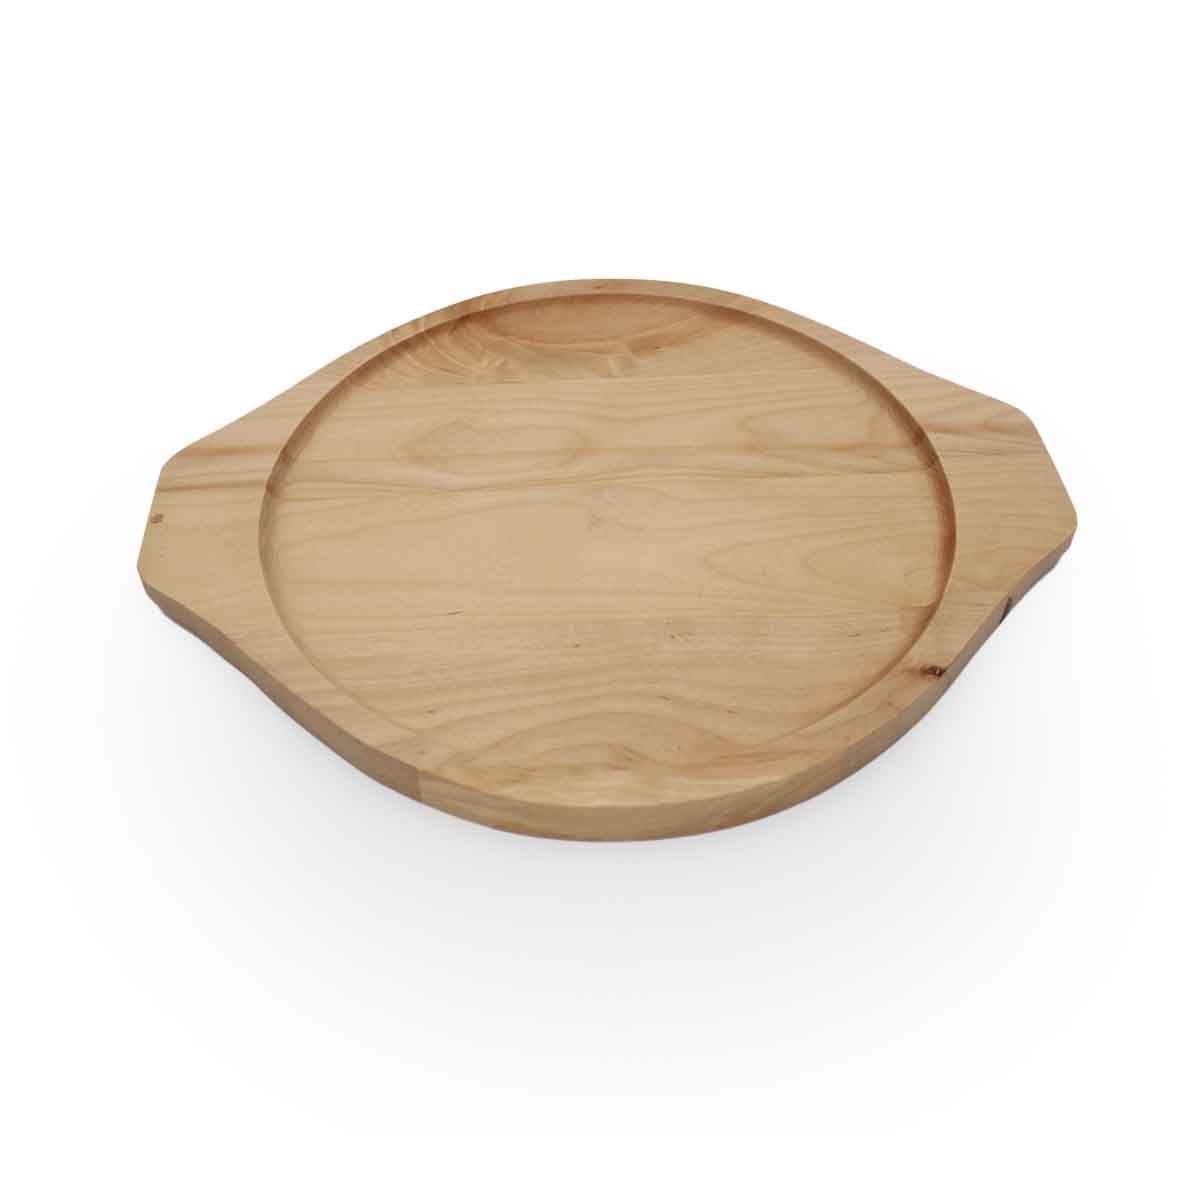 SANTOS Wedge Pan mit Holz-Serviertablett Ø 21,5 x 3 cm, Gusseisen, Holzbrett